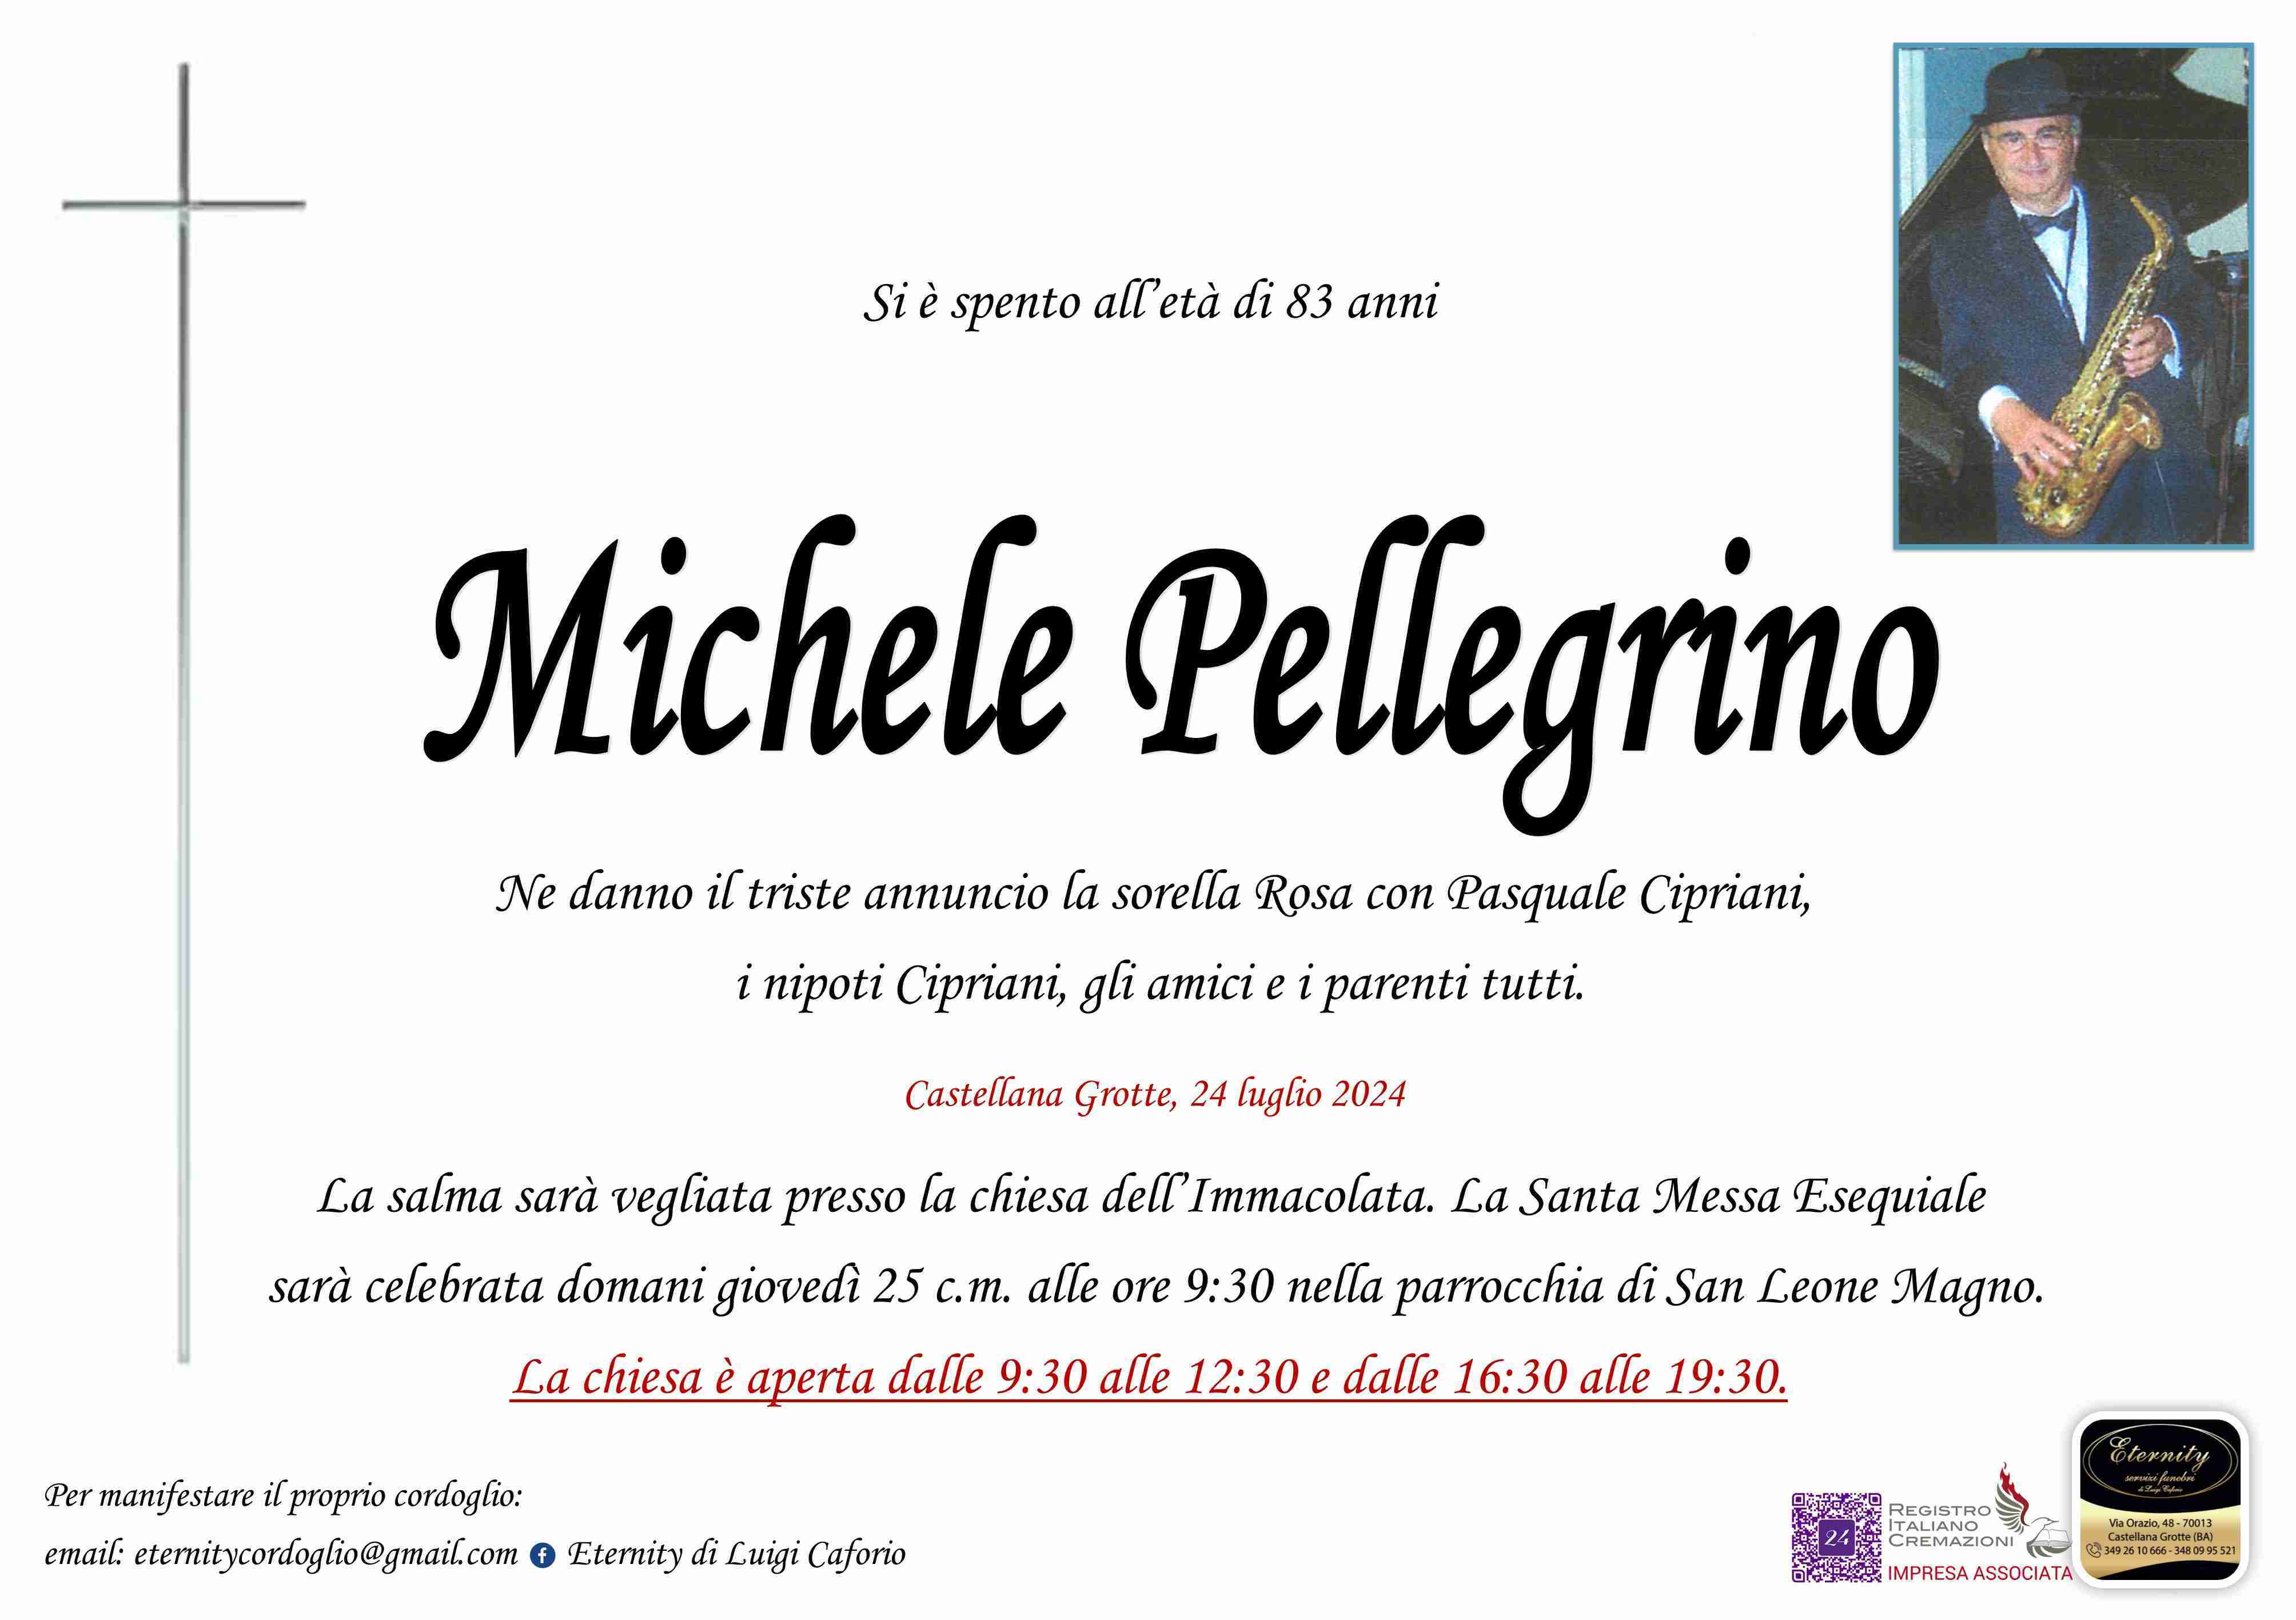 Michele Pellegrino